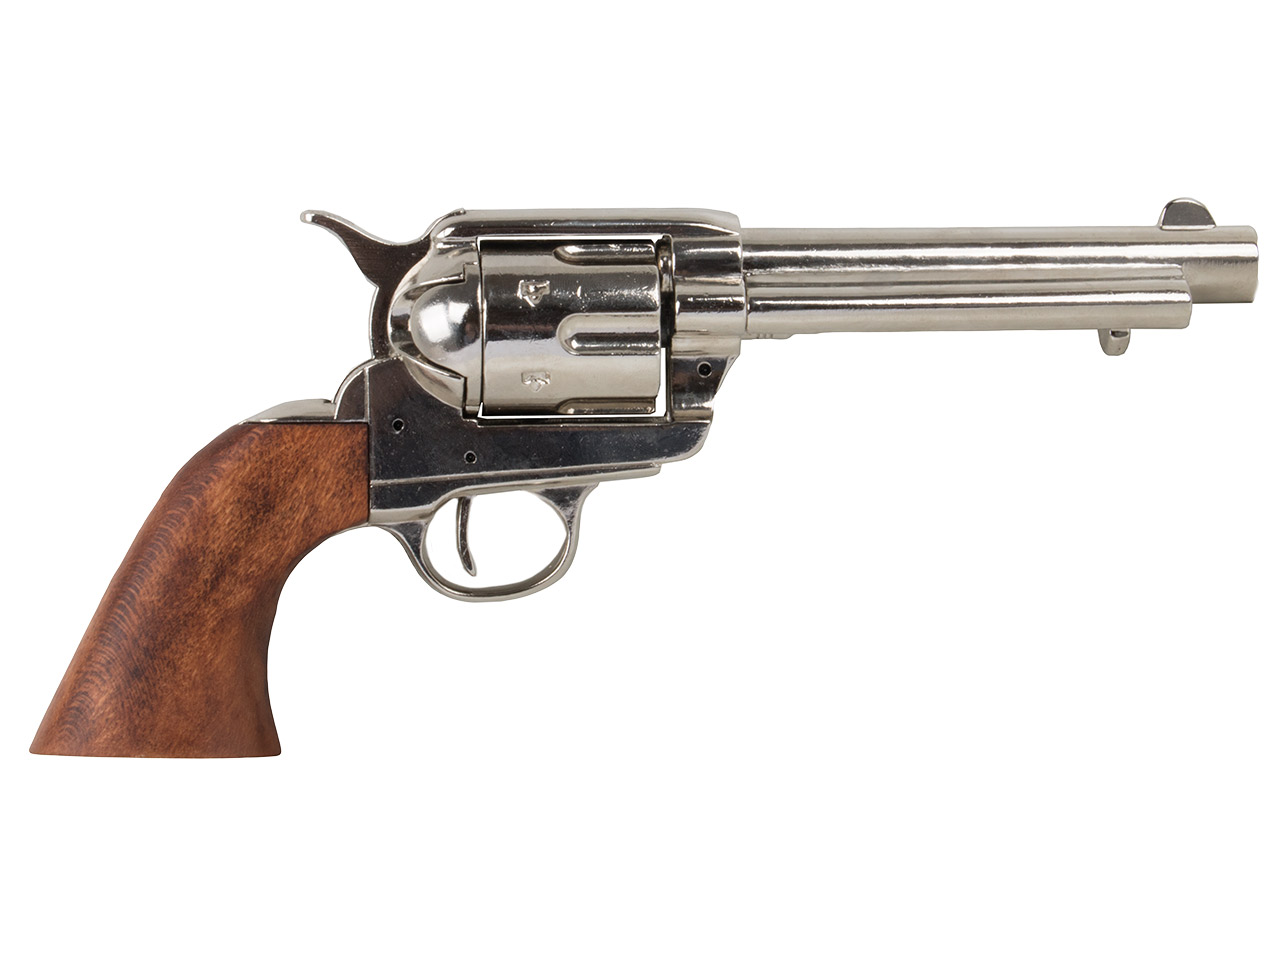 Deko Revolver US Kavalleriecolt Denix Colt .45 Peacemaker USA 1873 5,5 Zoll nickel